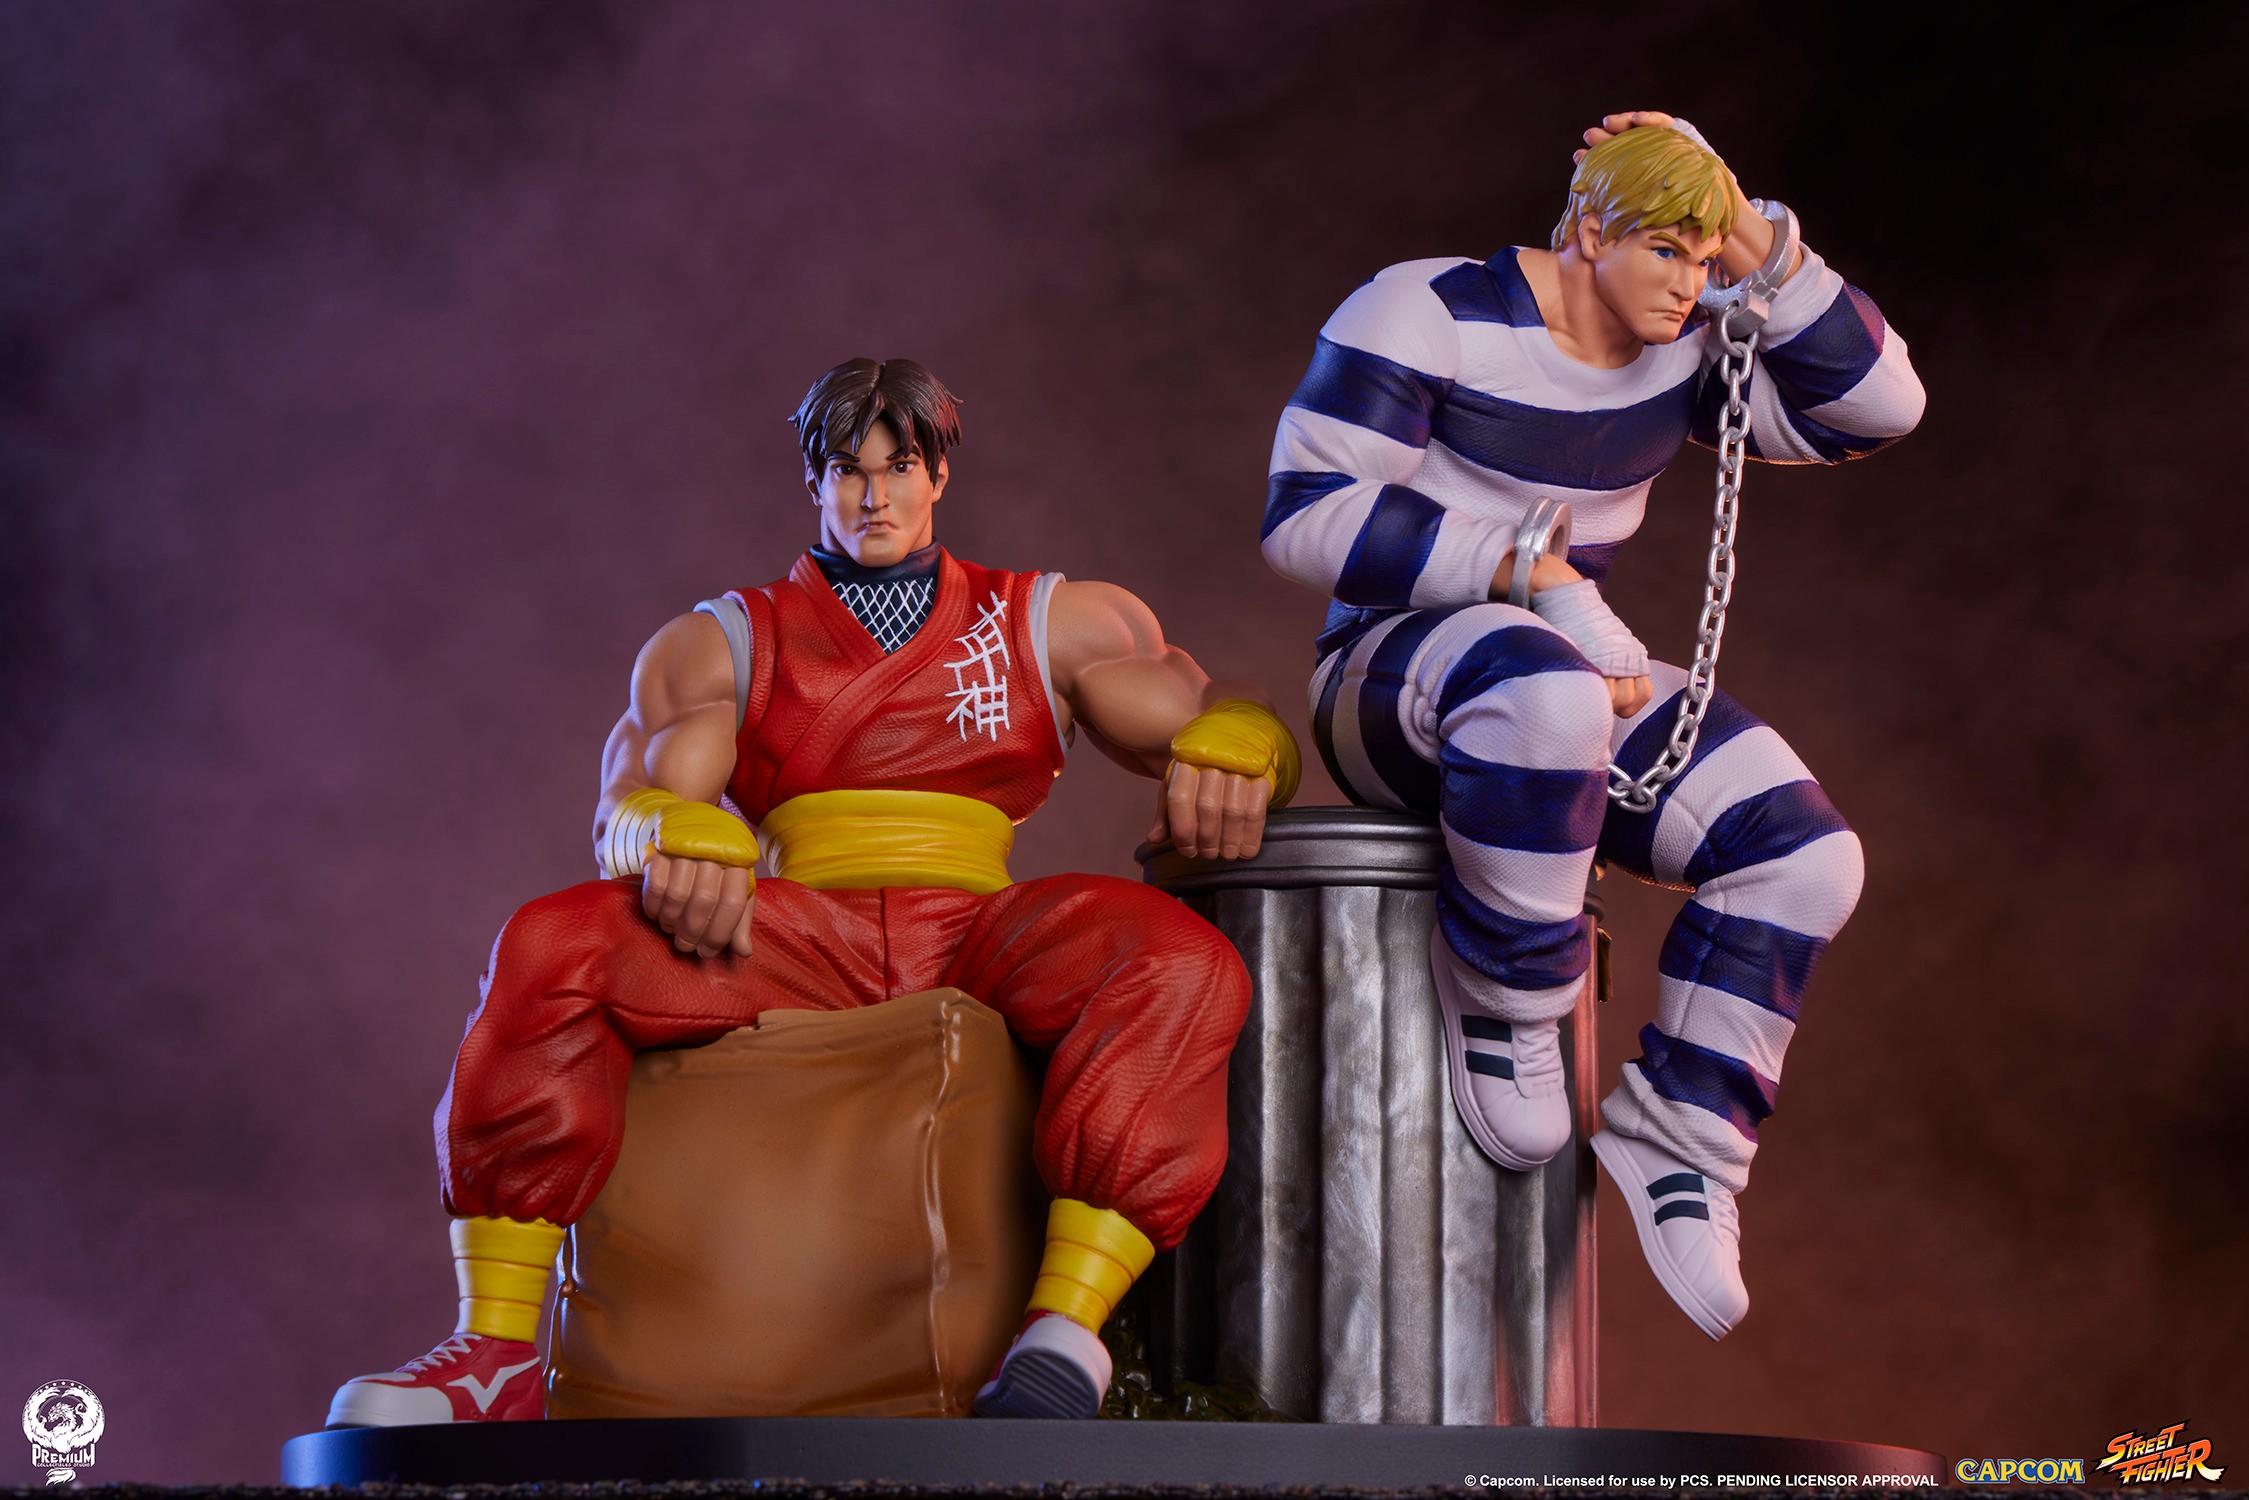 Capcom Street Fighter IV 20th Anniversary CHUN-LI Action Figure Gift in Box